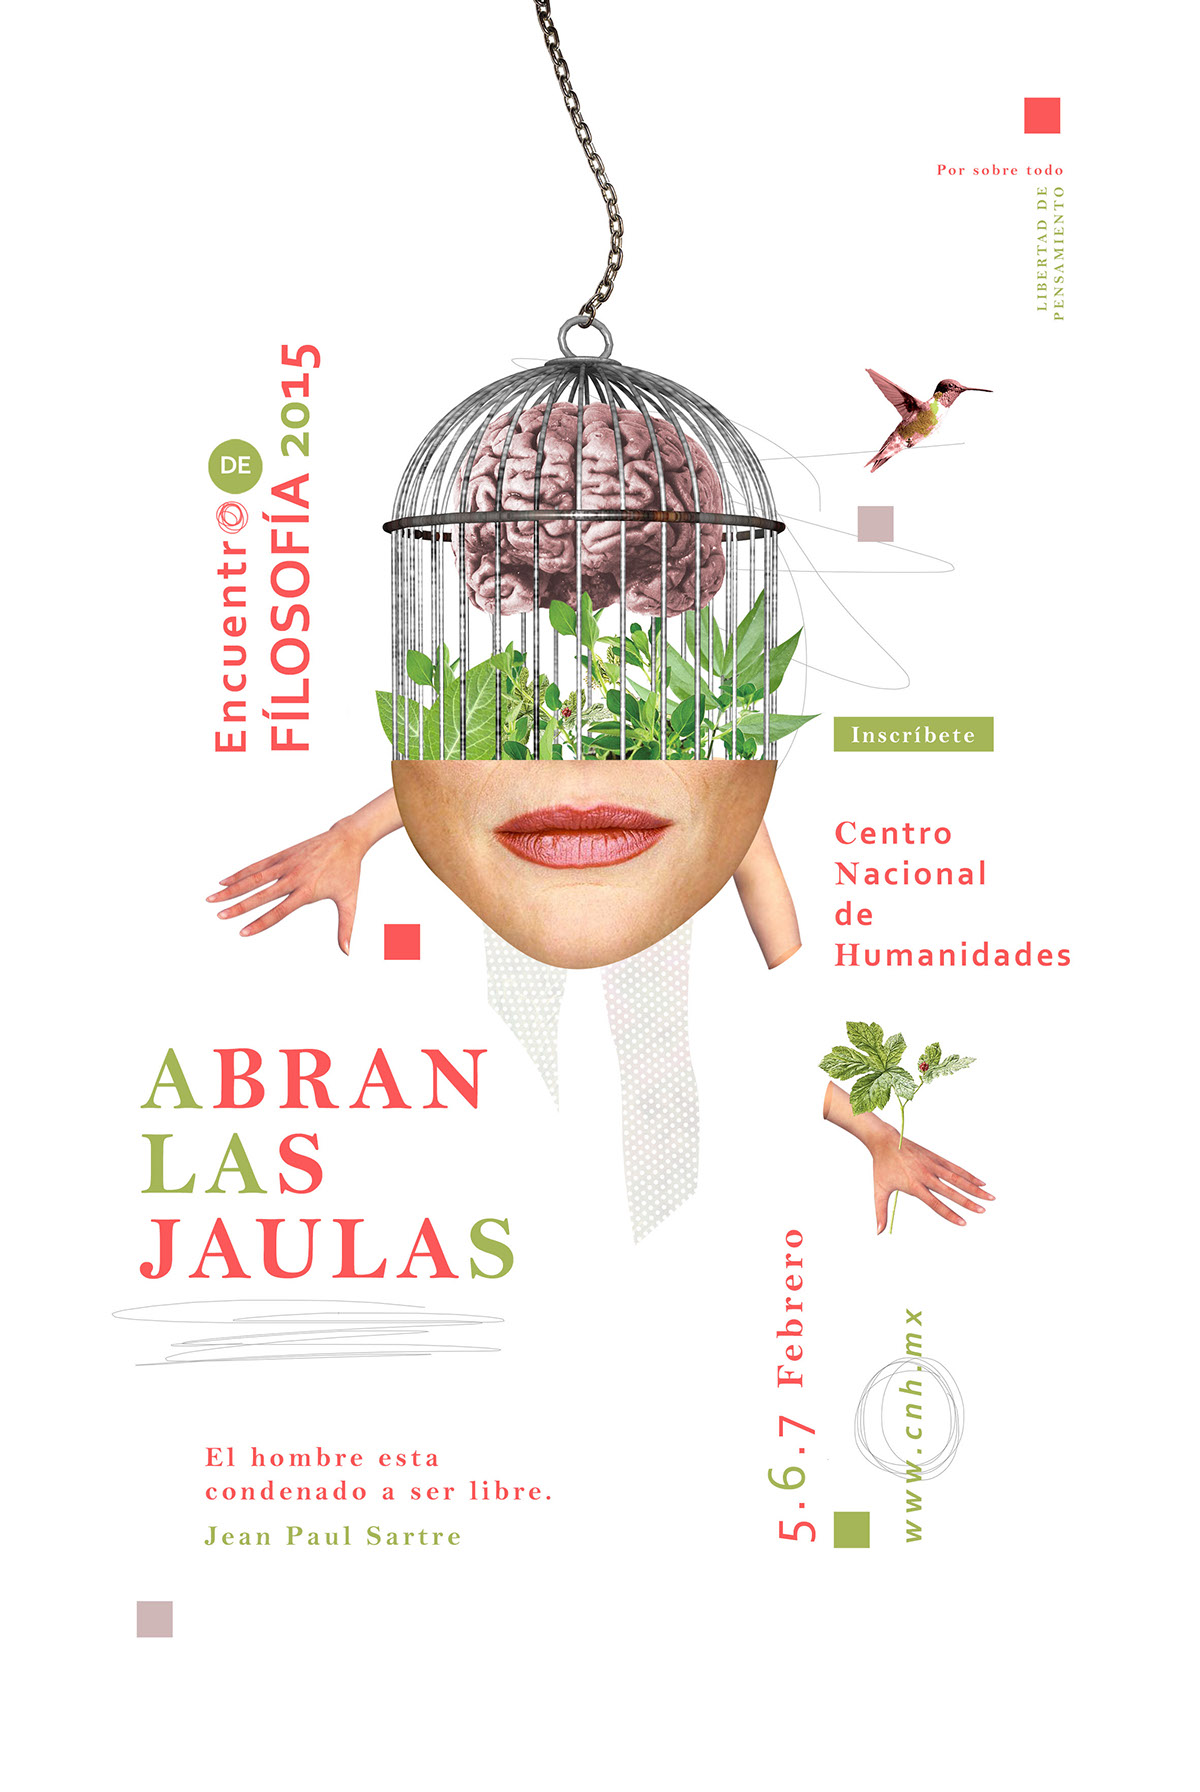 collage ilustration arte digital Diseño editorial editorial filosofia brand poster cartel afiche